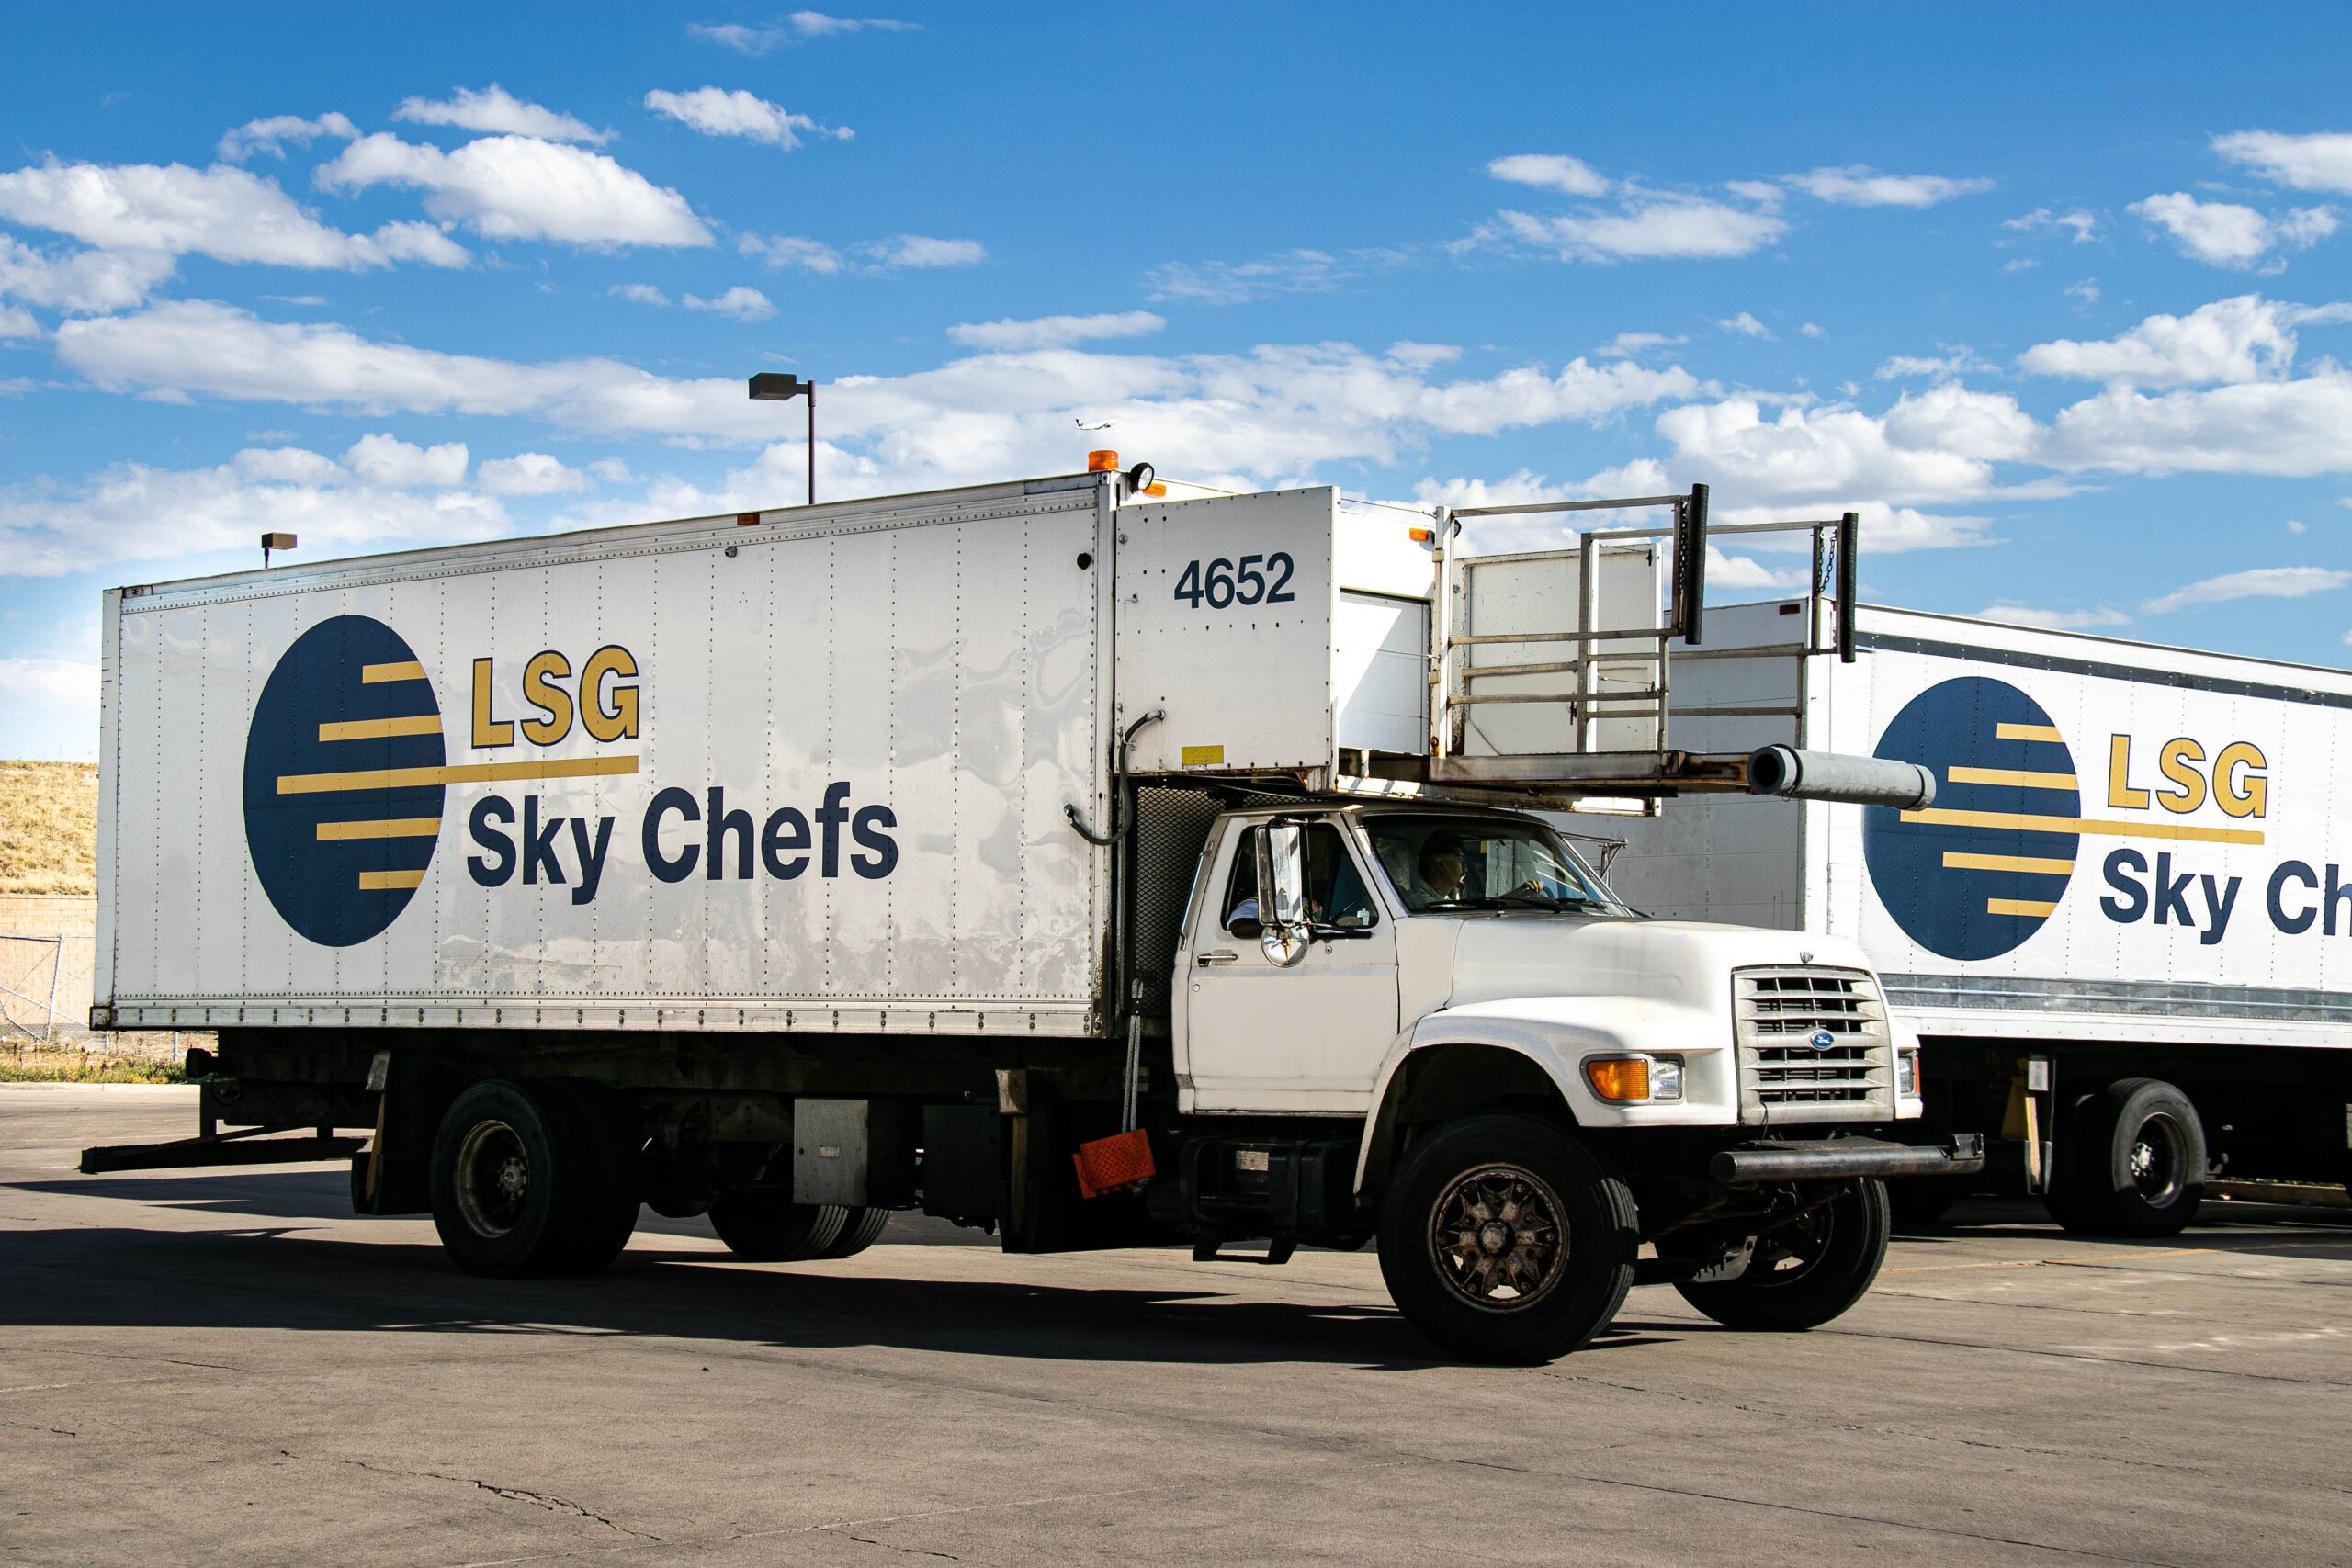 LSG Sky Chefs catering truck